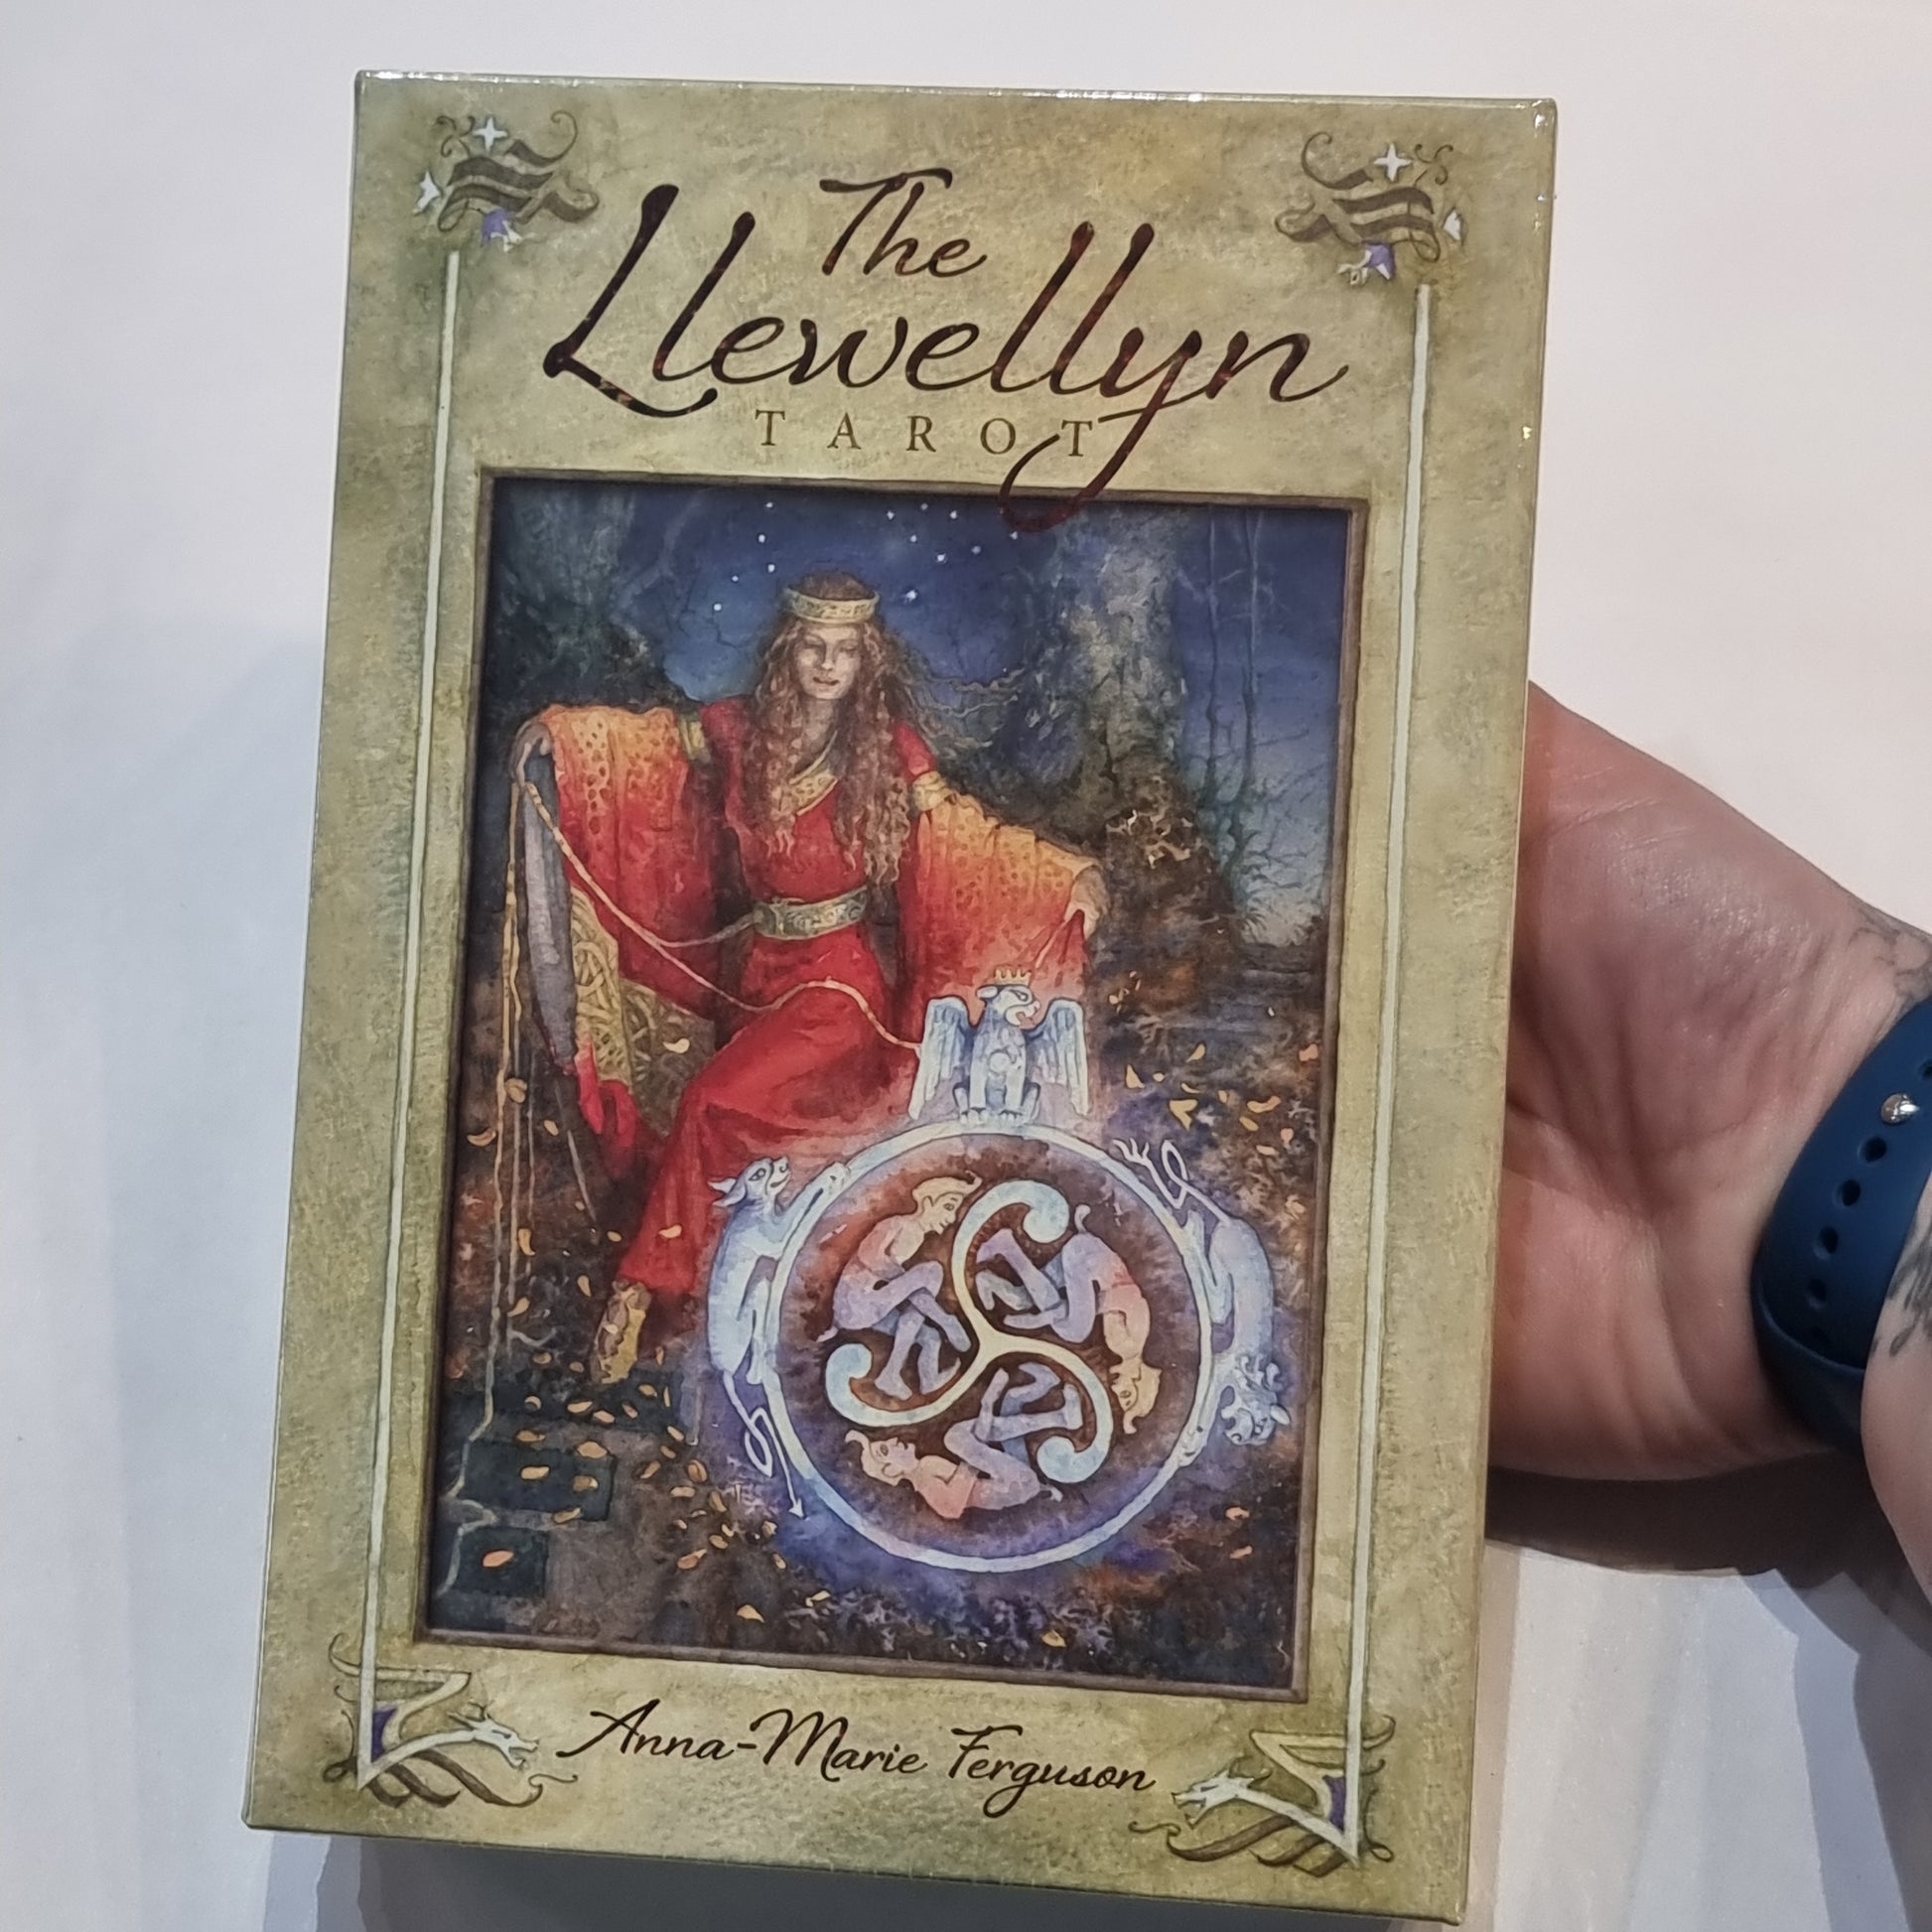 The llewellyn Tarot Set - Rivendell Shop